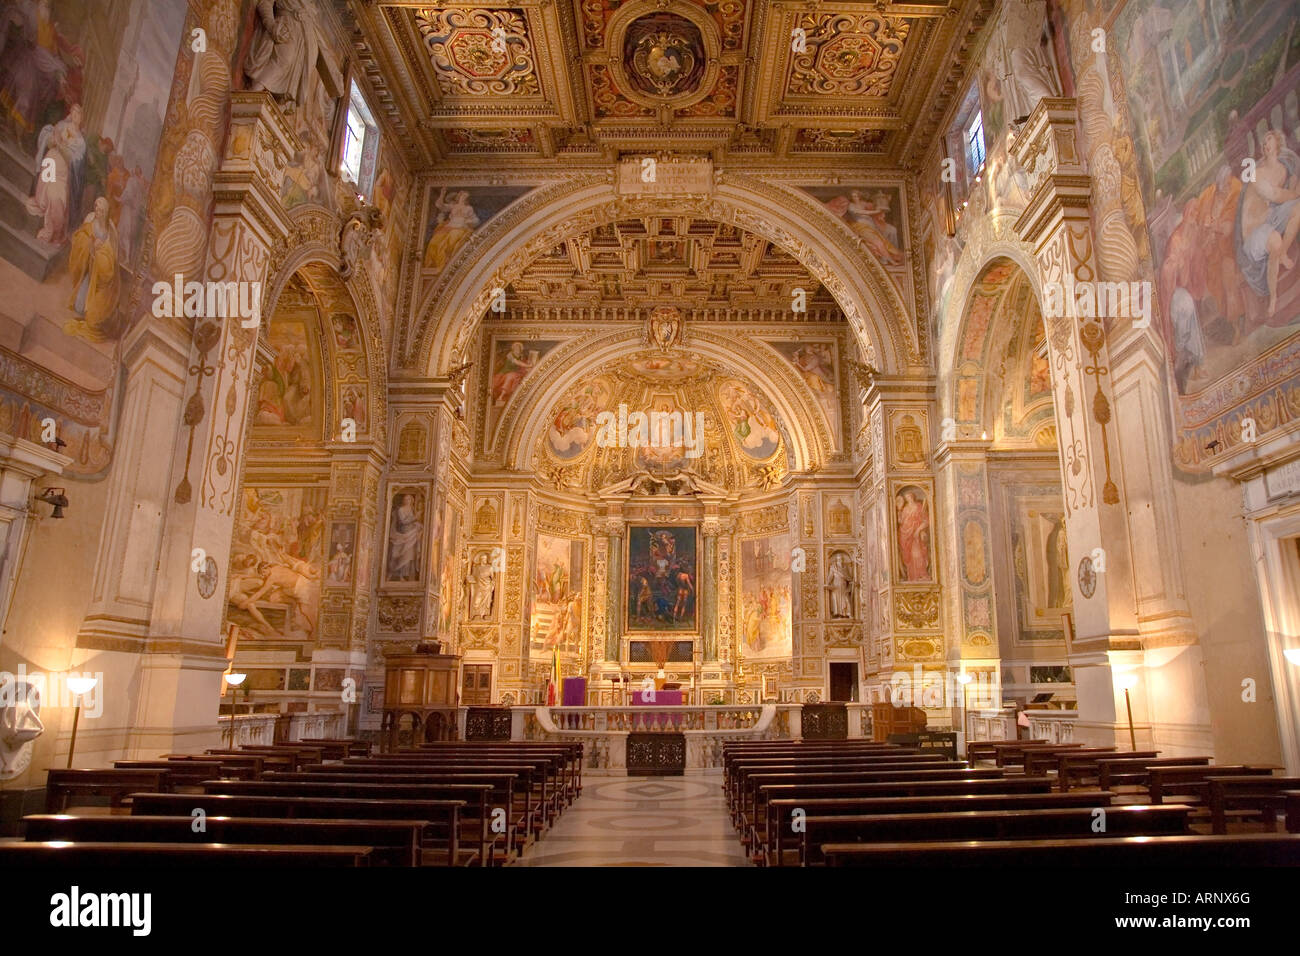 Iglesia de Santa Susanna interior Fotografía de stock - Alamy